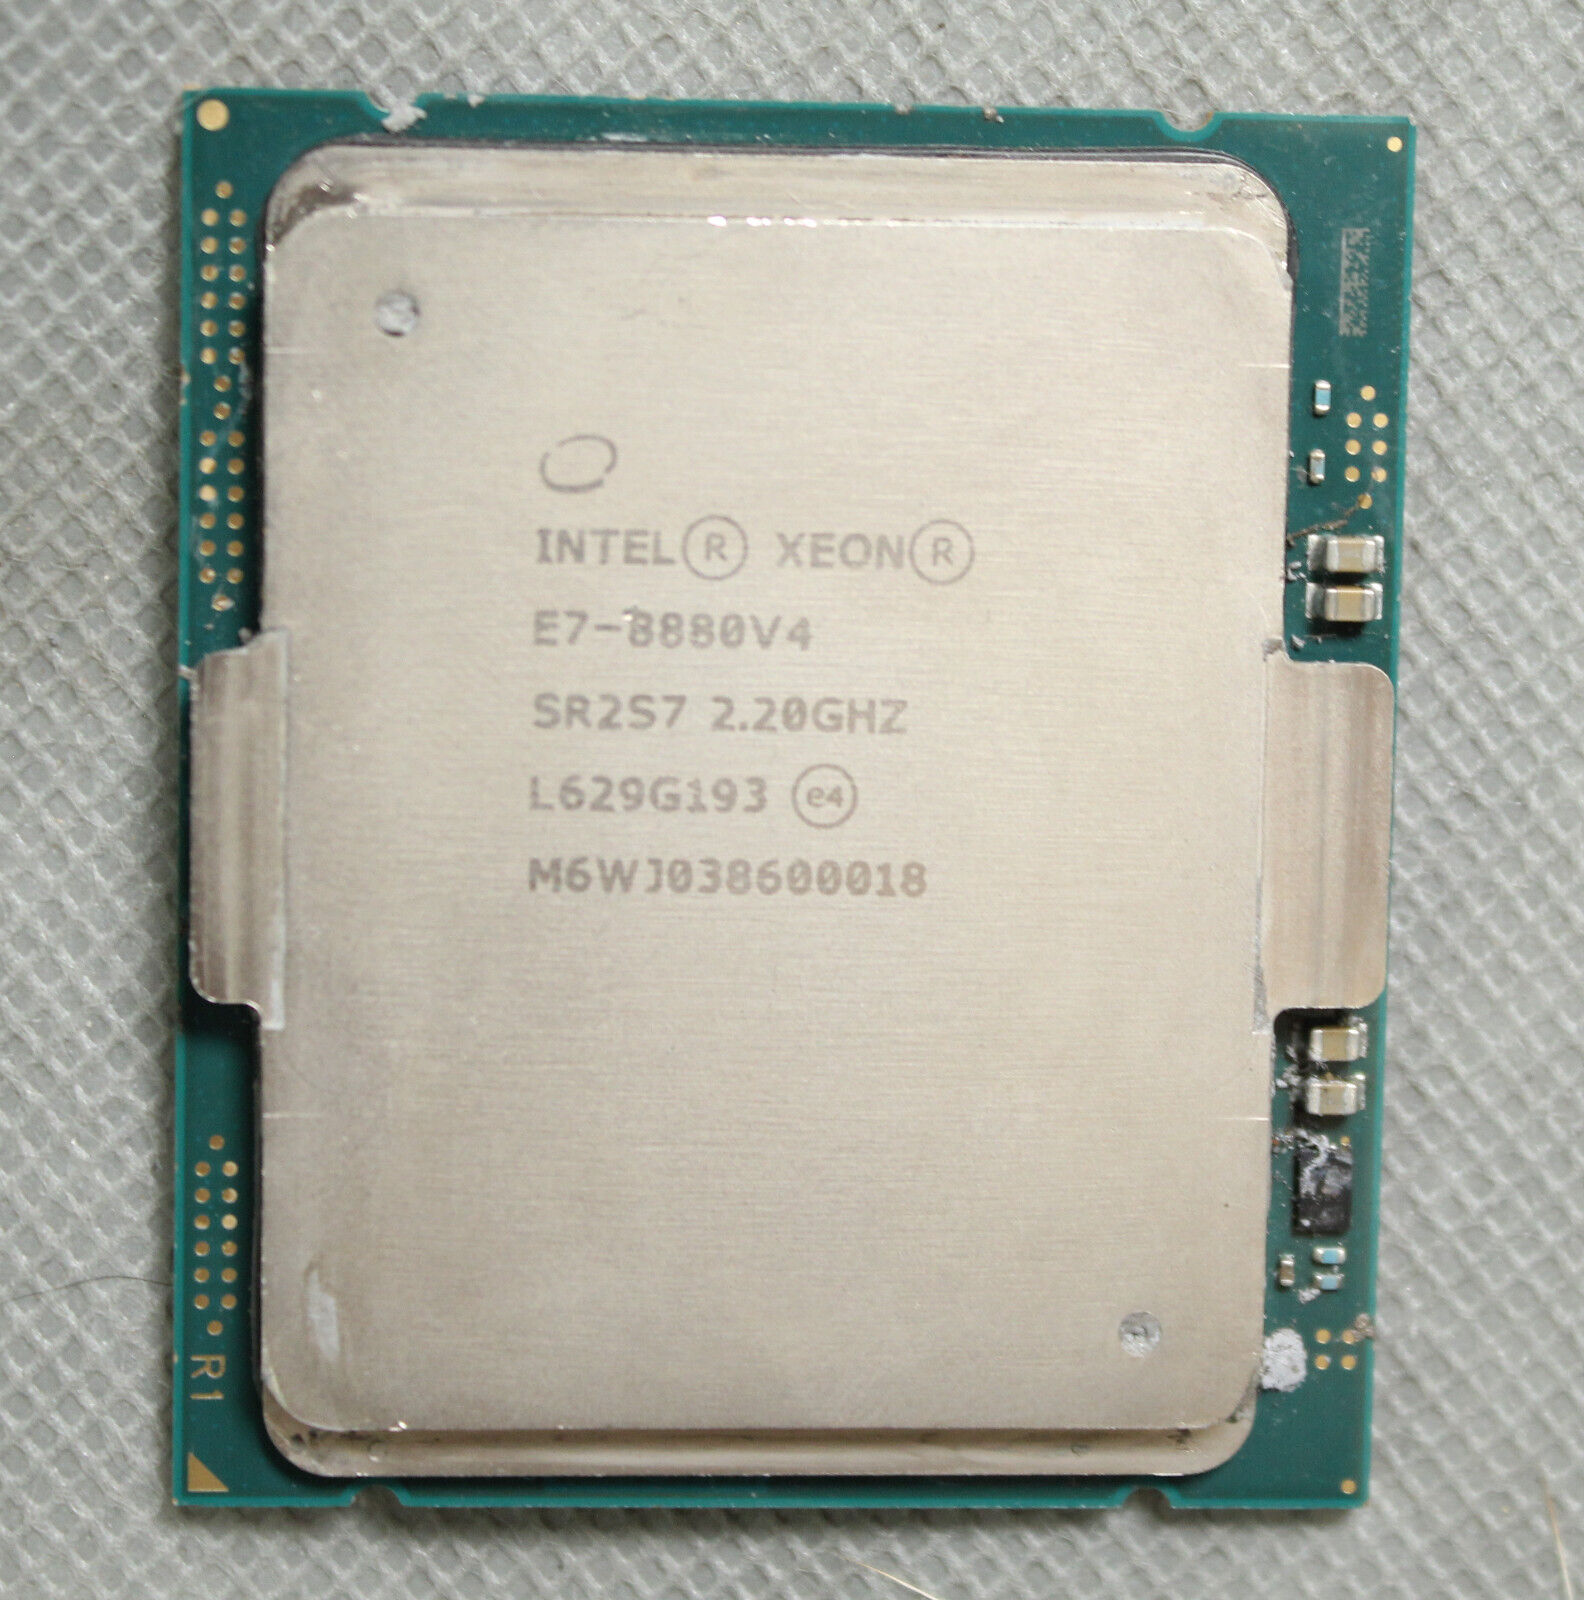 Lot of 3 Intel Xeon E7-8880v4 22-Core 2.2GHz LGA2011 Server Processor CPU SR2S7